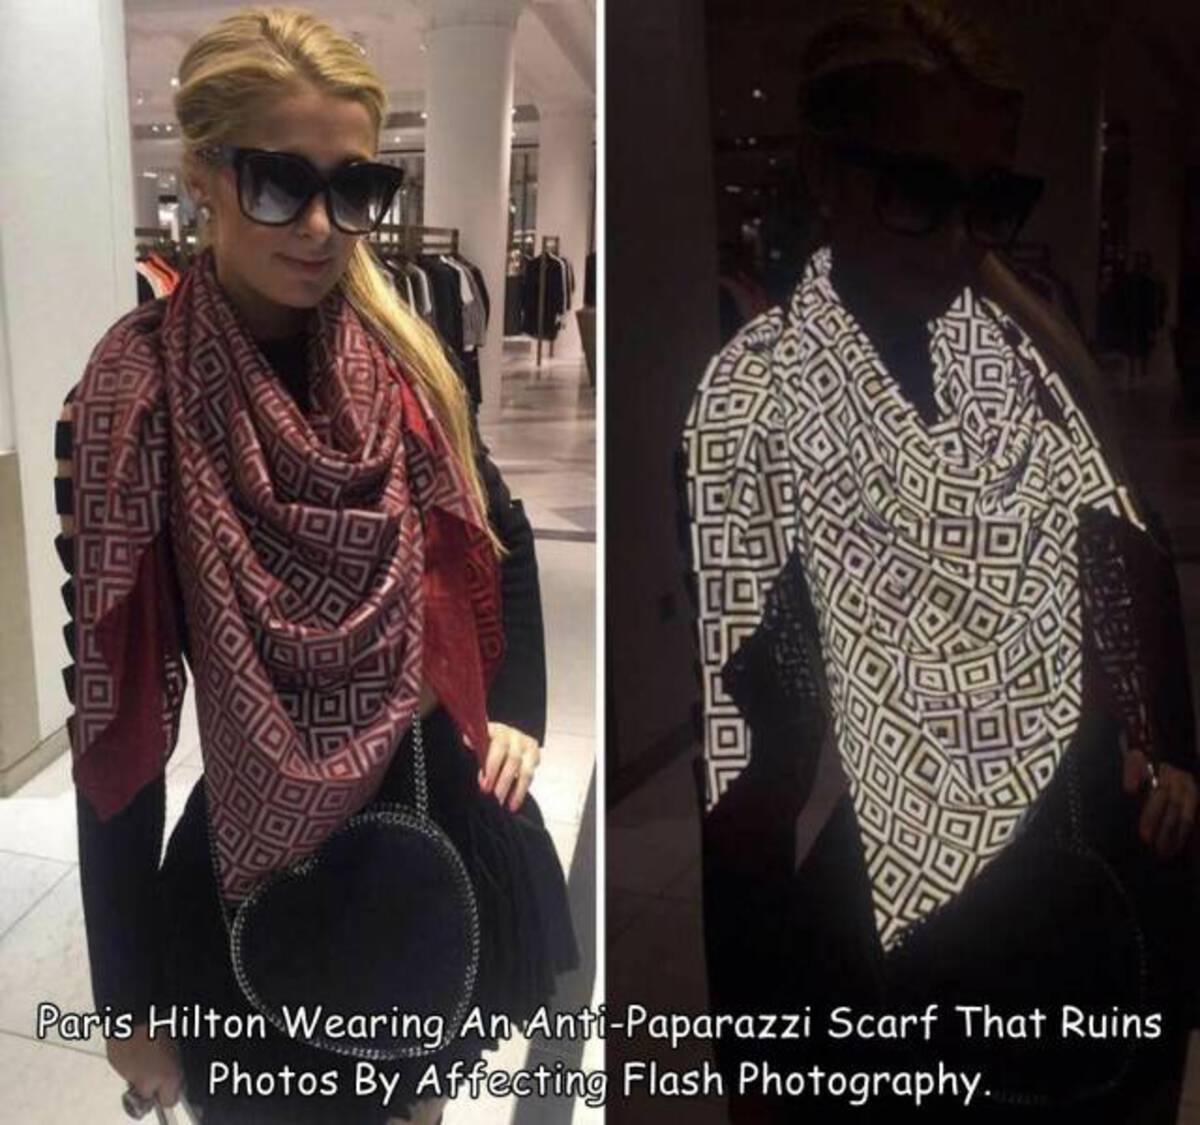 anti paparazzi scarf - Paris Hilton Wearing An AntiPaparazzi Scarf That Ruins Photos By Affecting Flash Photography.com